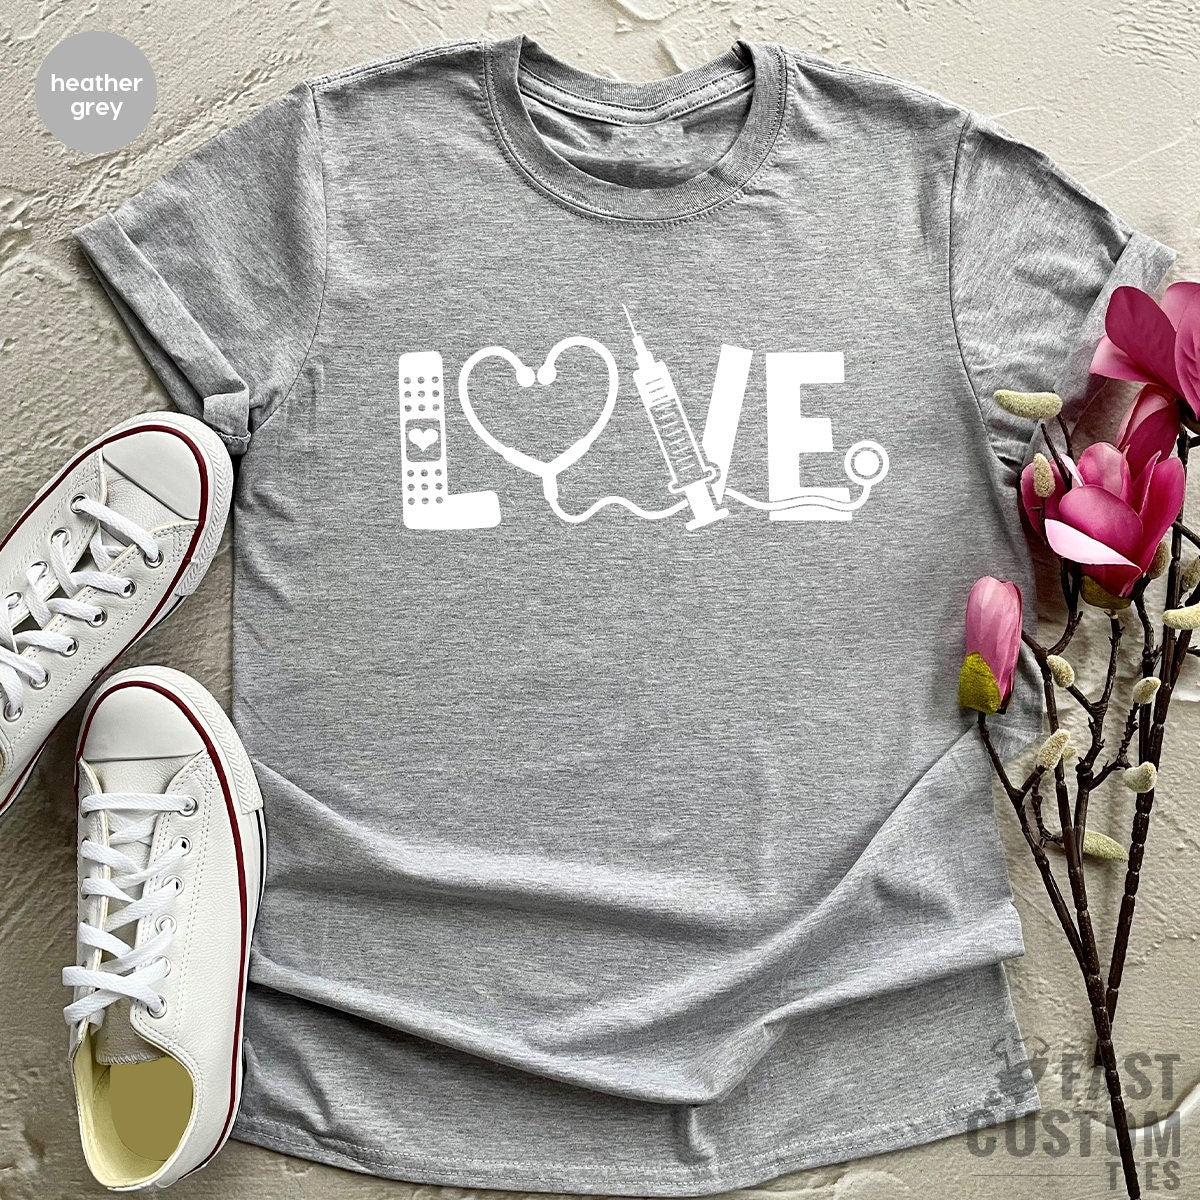 Love T-Shirt, Nurse Life T Shirt, Health Care T-Shirt, Quarantine Tshirts, Heart Stethoscope Shirt, Cute Doctor Gift, Valentine Days Shirt - Fastdeliverytees.com